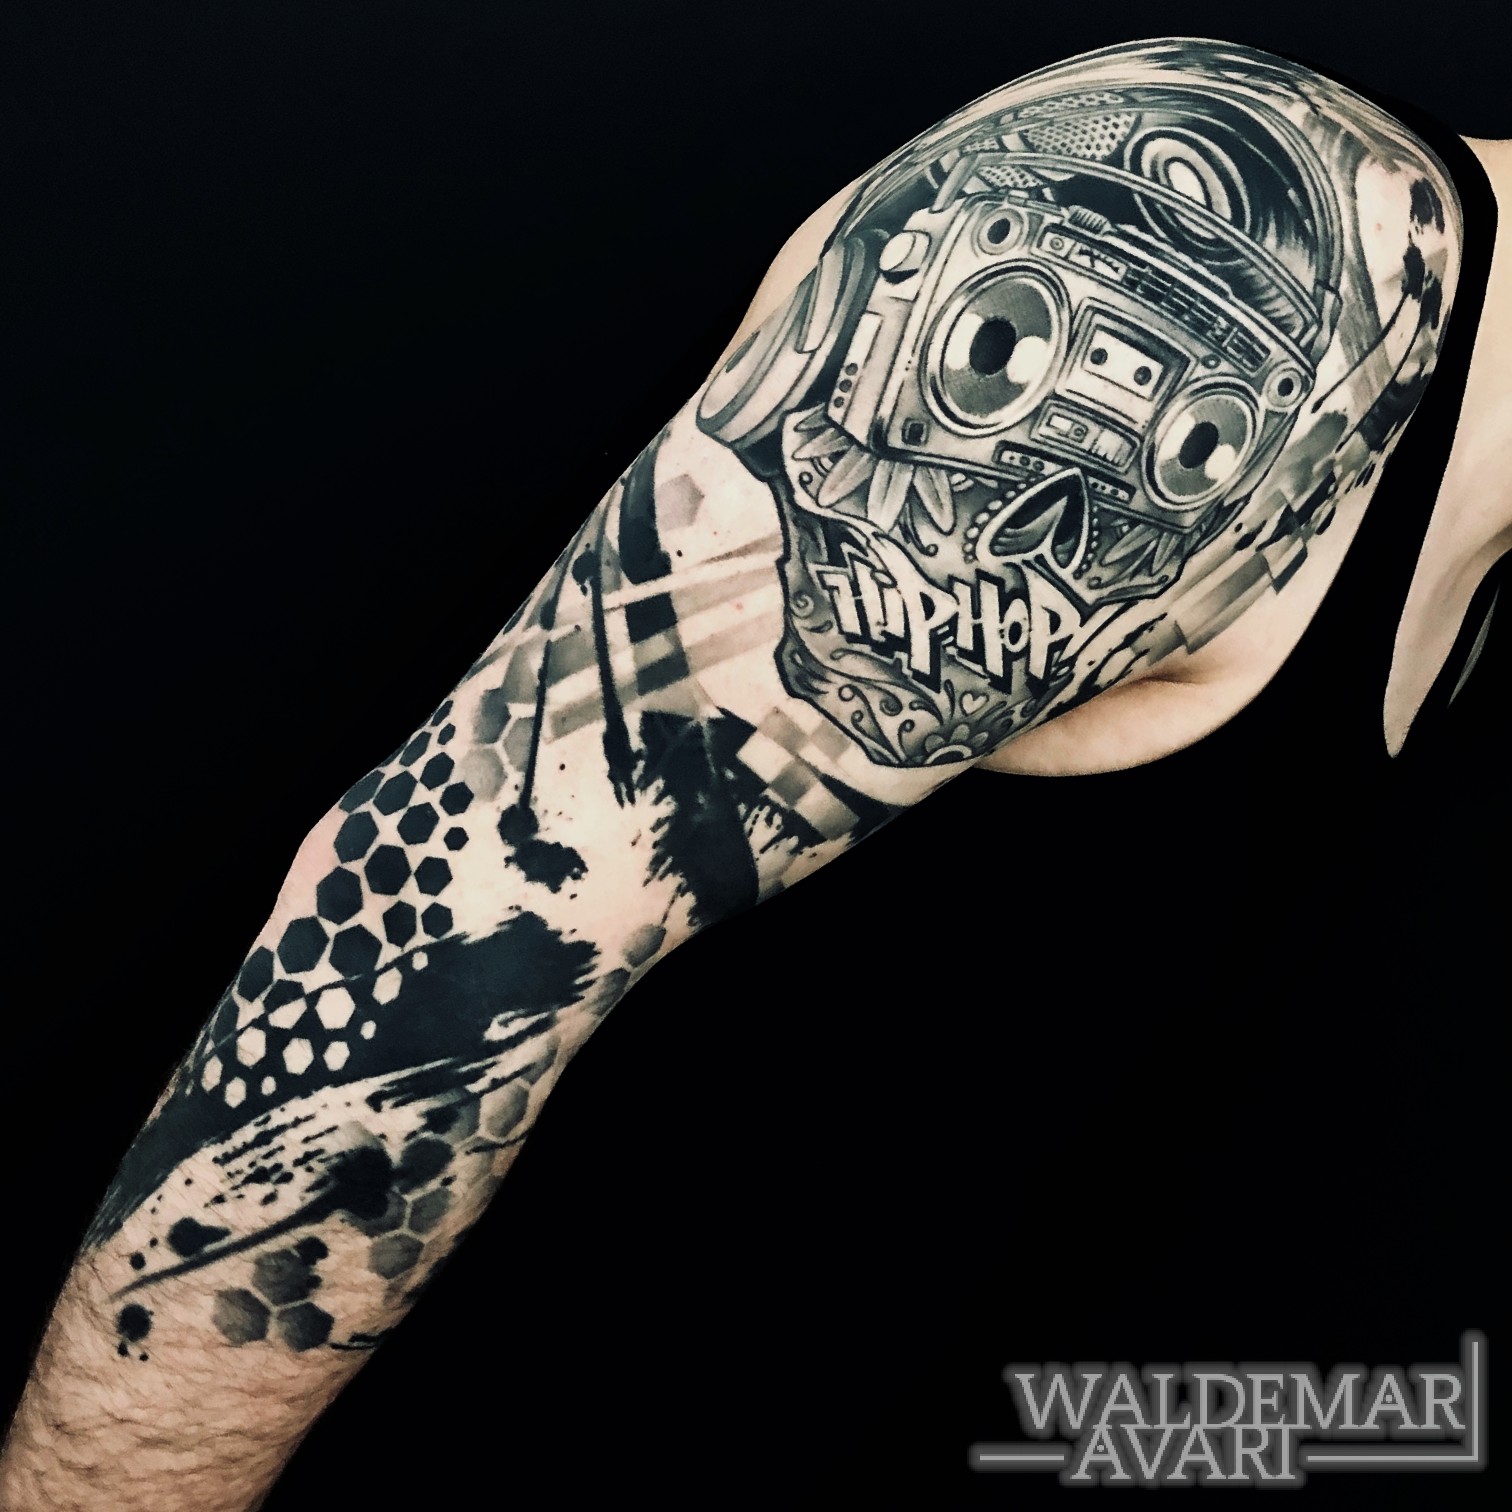 WALDEMAR AVARI - Tattookunstwerk Solingen